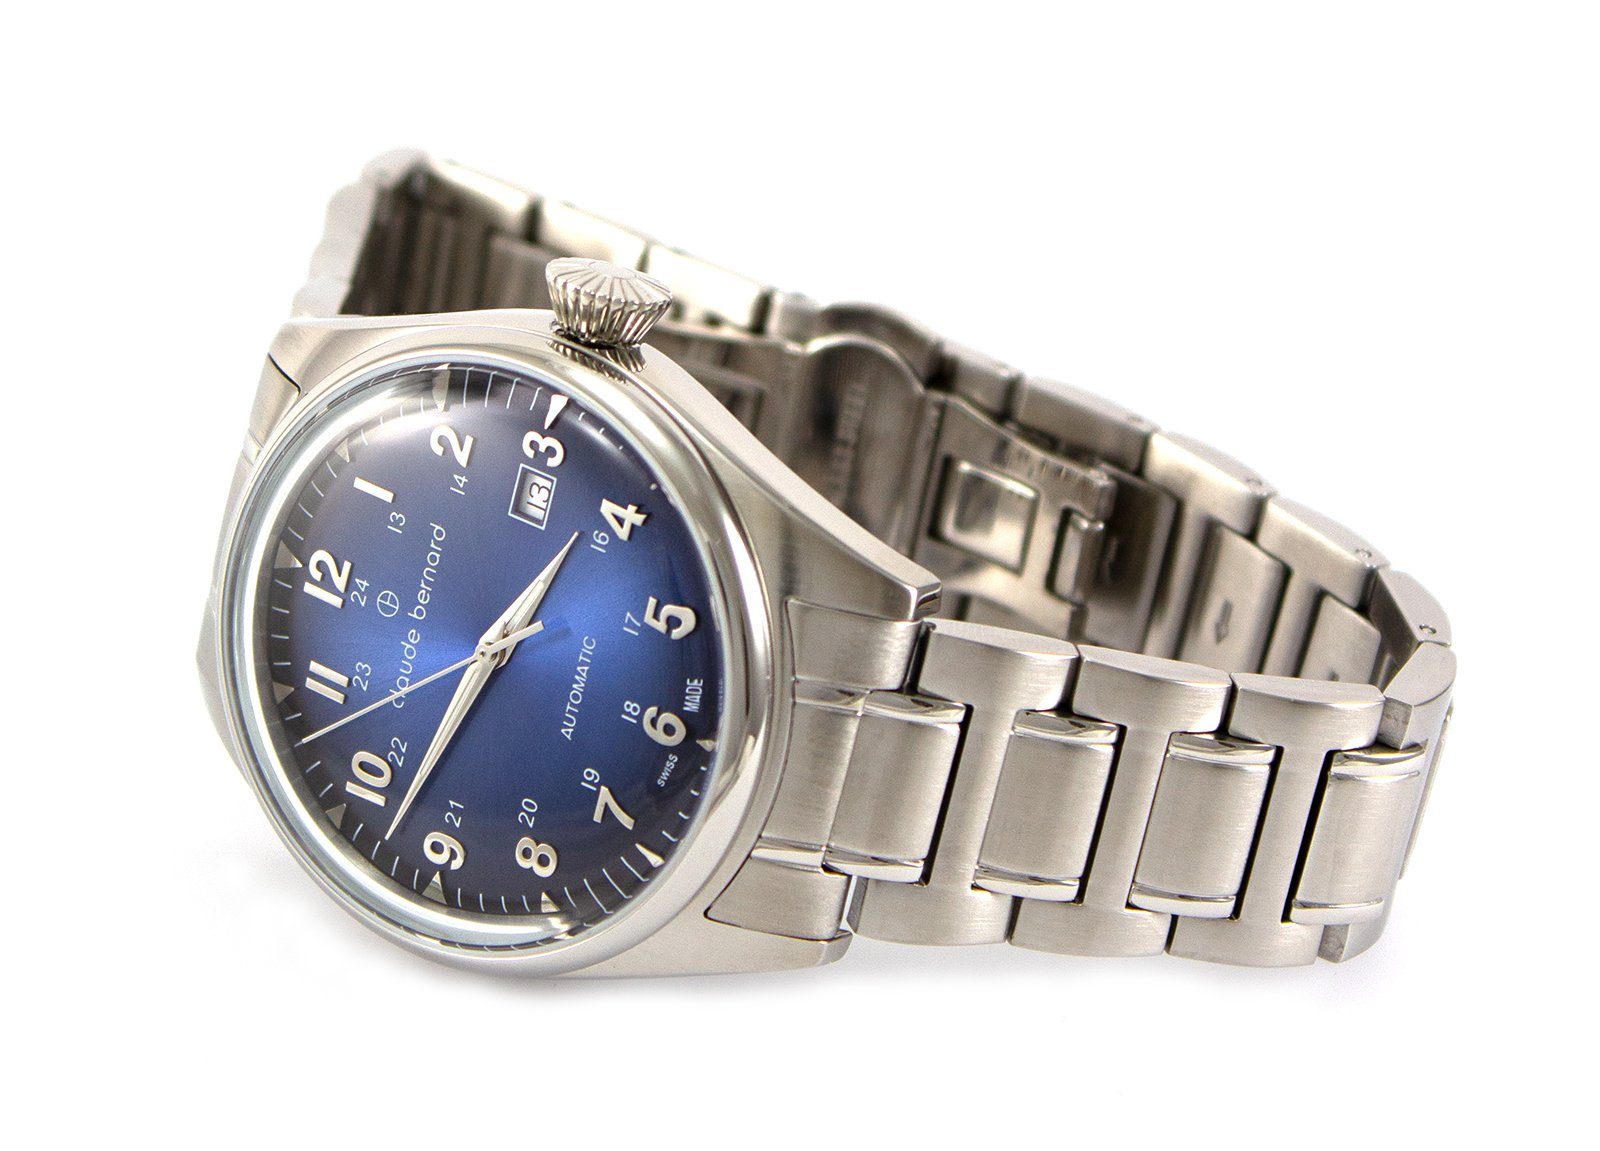 Proud BERNARD Schweizer Uhr Automatic CLAUDE Heritage Blau